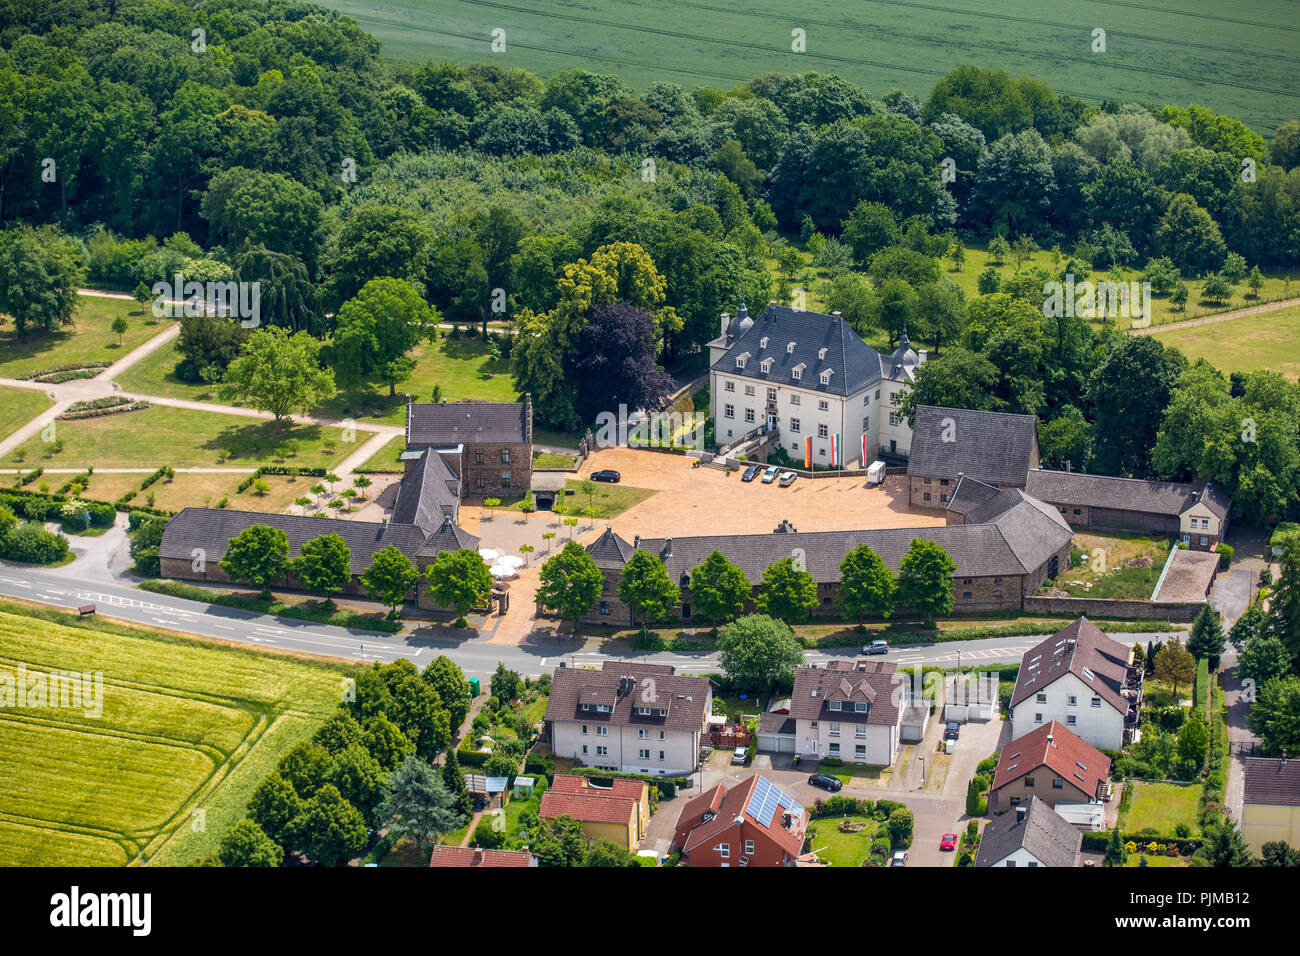 Haus Opherdicke and landscape park, Holzwickede, Ruhr area, North Rhine-Westphalia, Germany Stock Photo